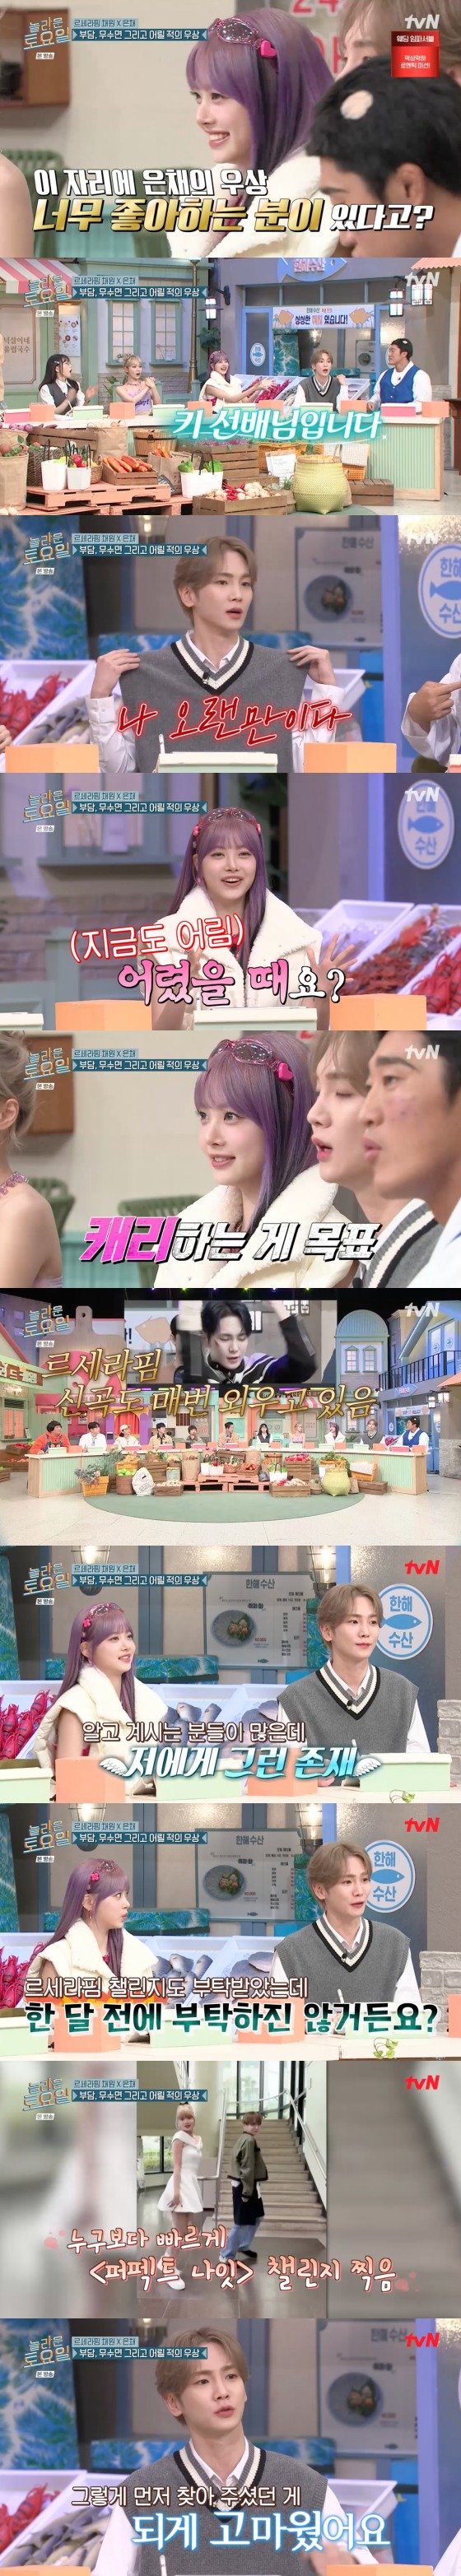 tvN '놀라운 토요일' 방송 화면 캡처